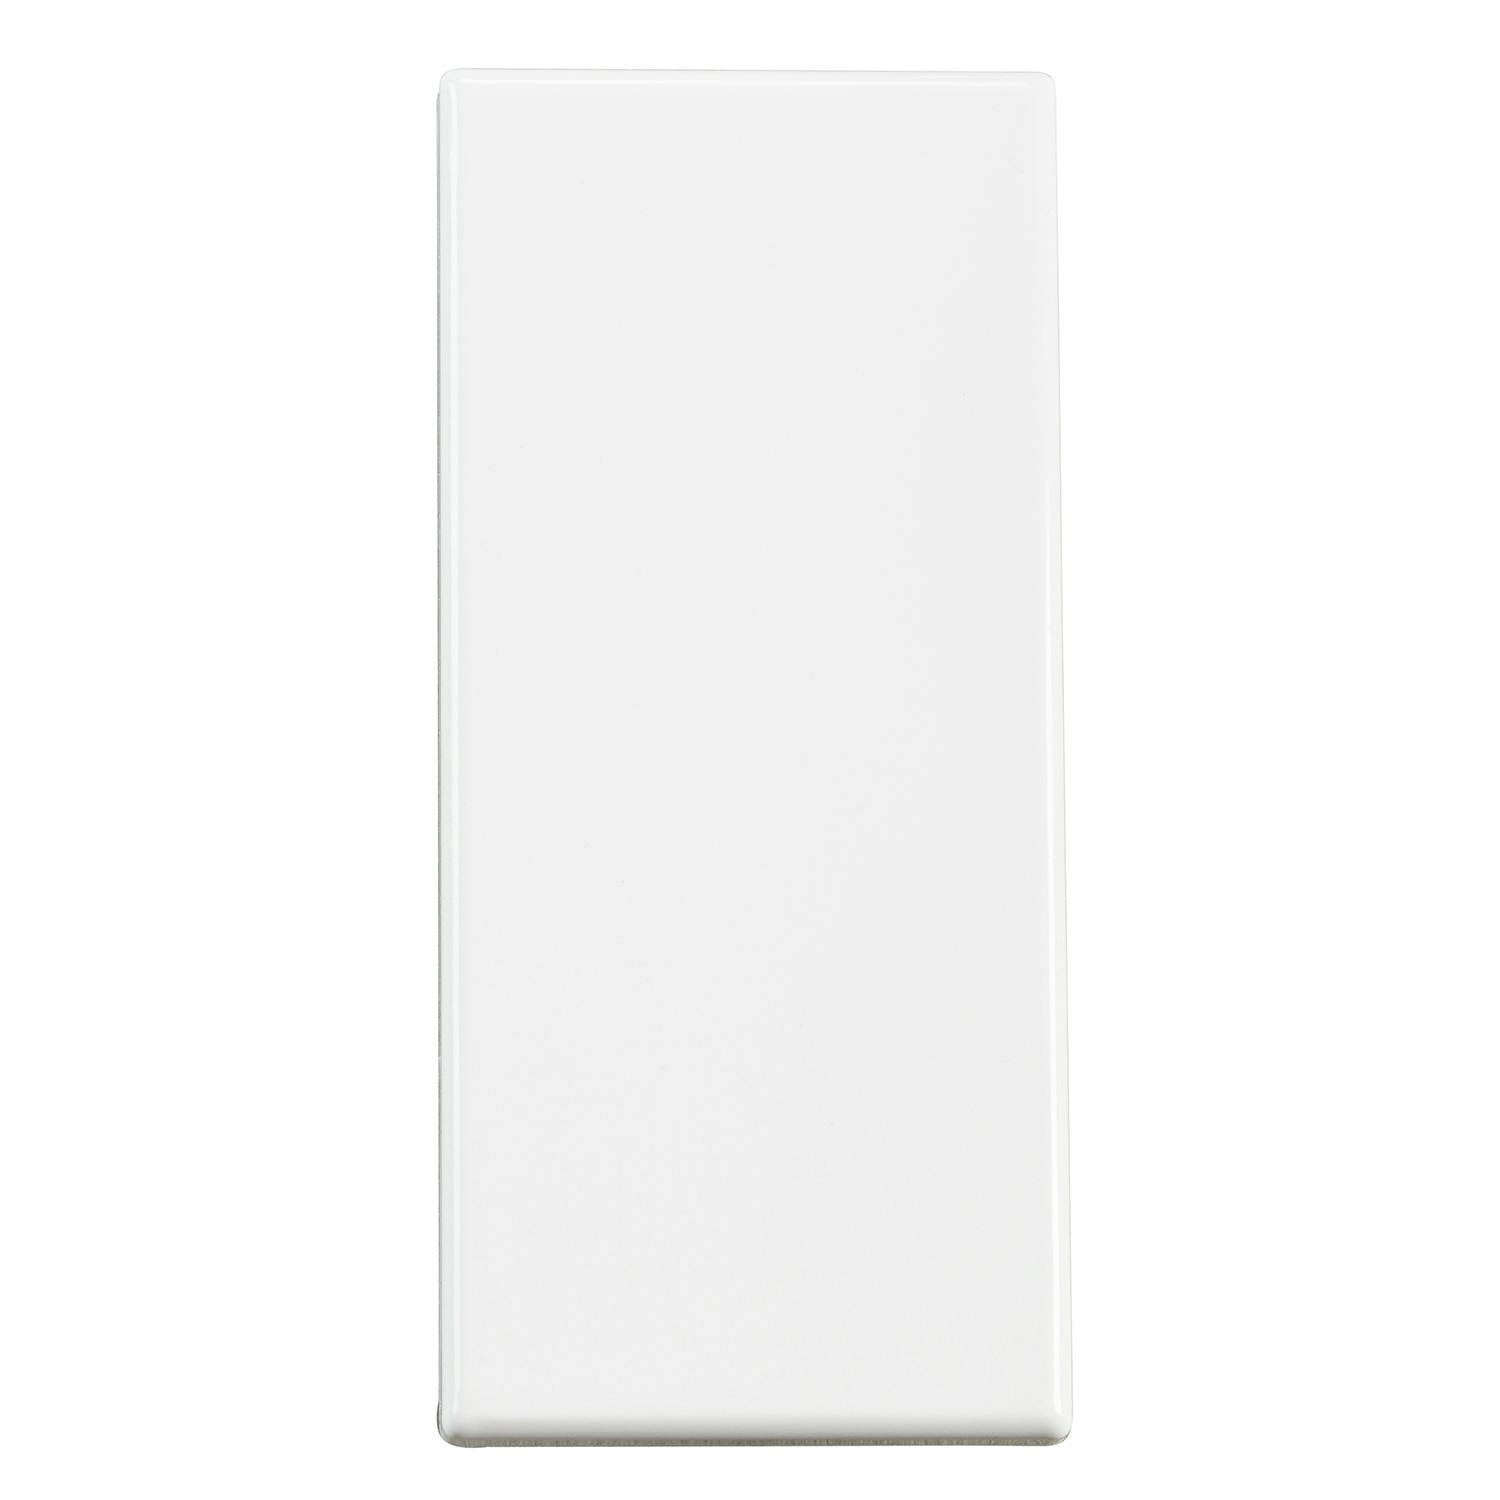 Address Light Full Size Blank Panel White on a white background